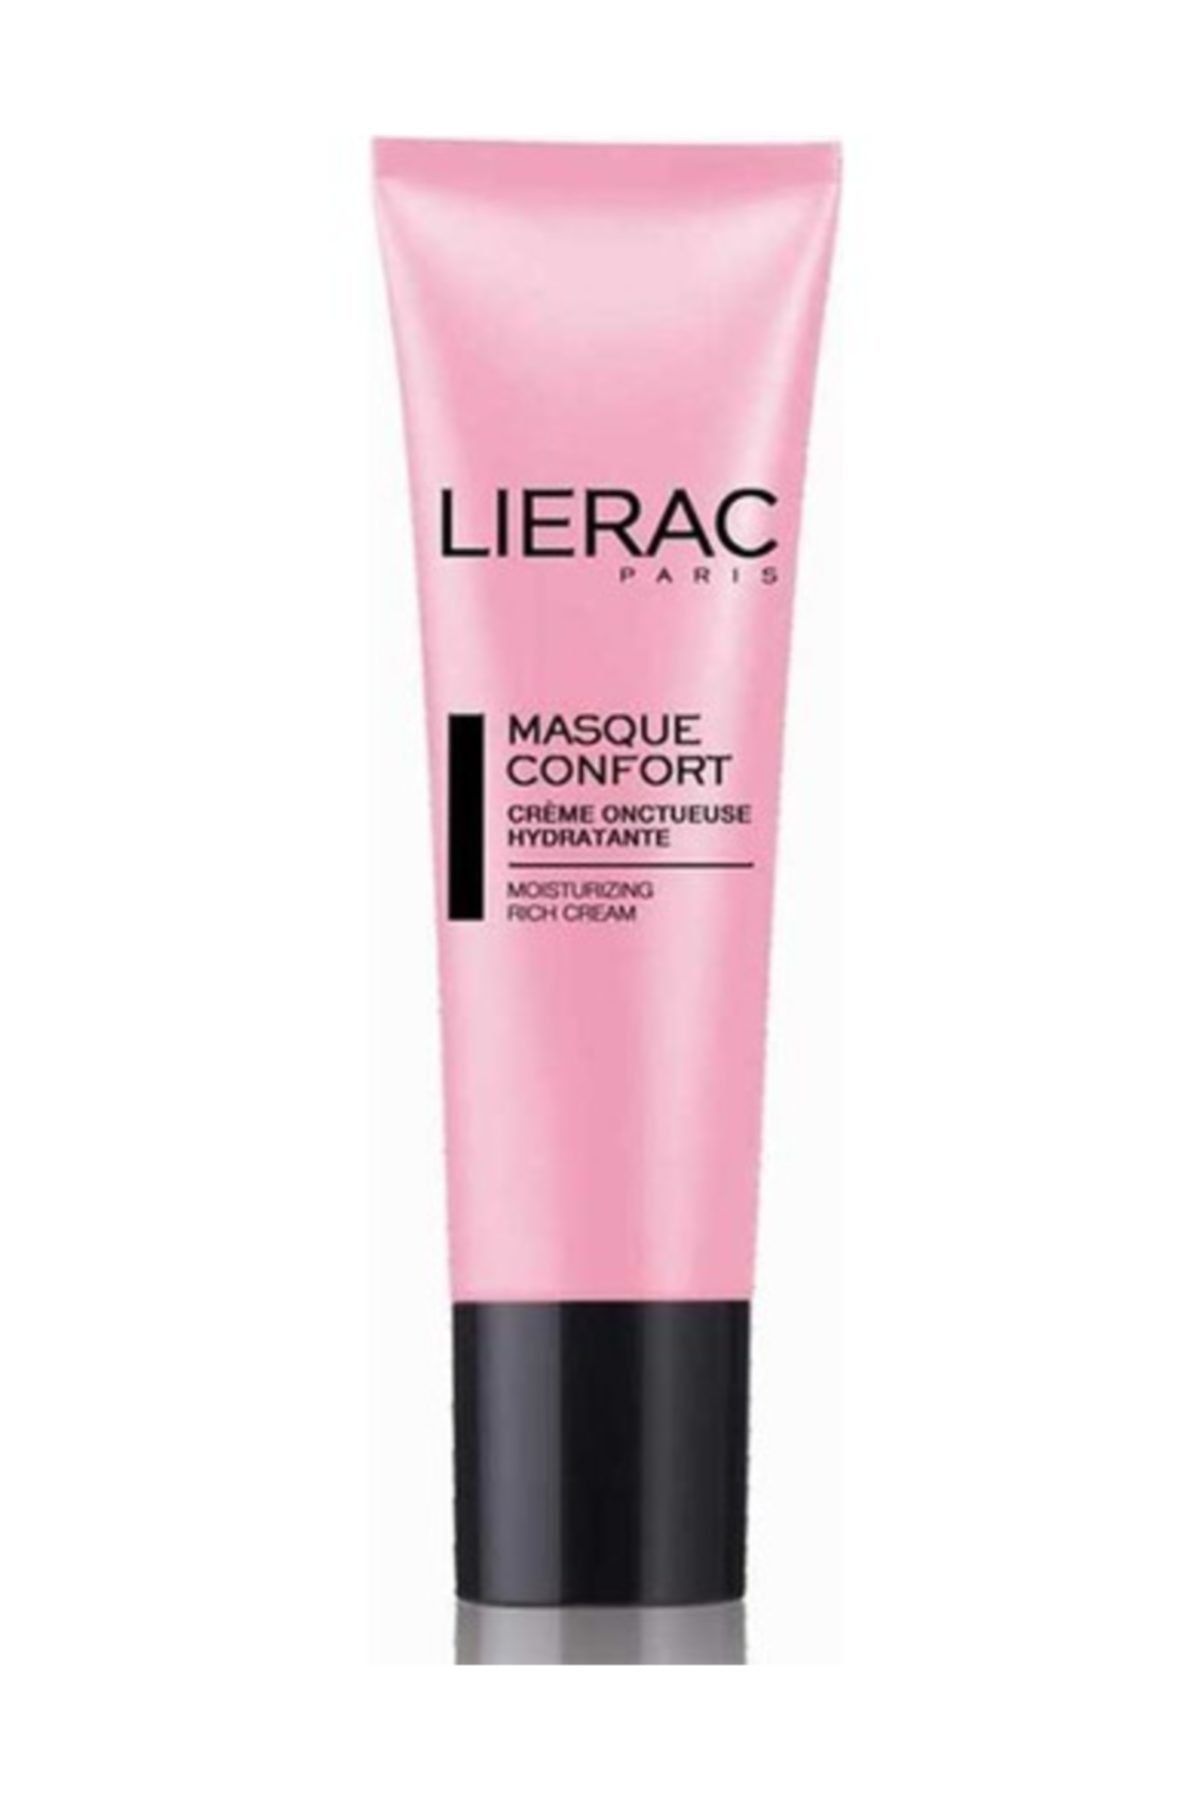 Lierac Masque Comfort Mask 50 Ml 8699859595659